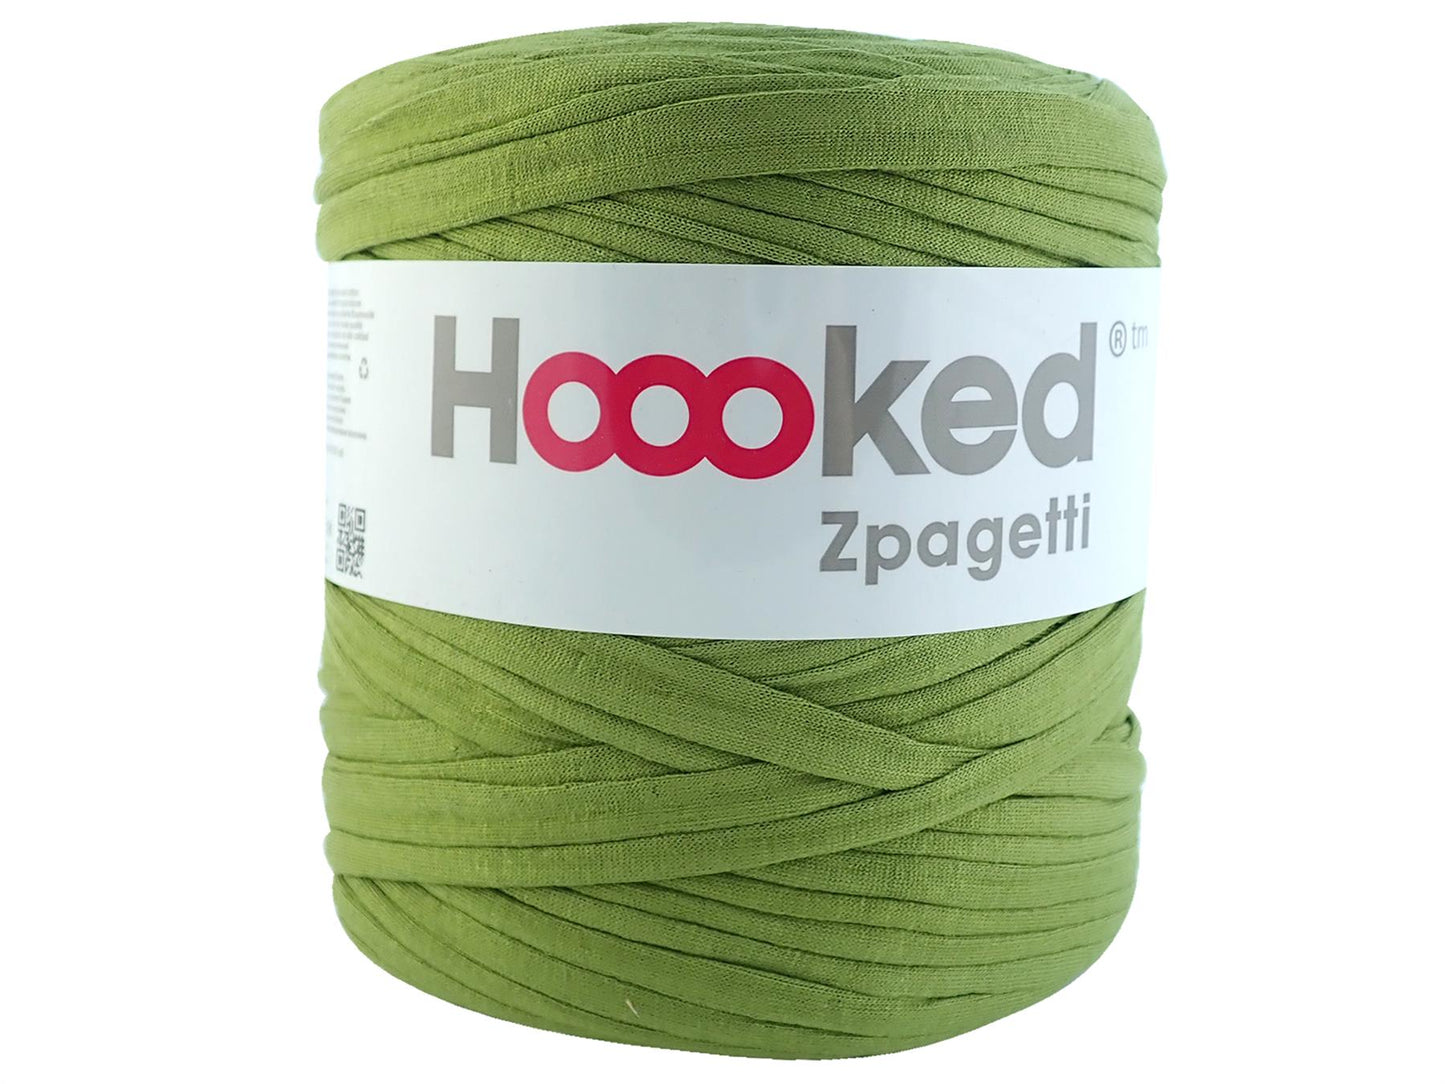 Hoooked Zpagetti Grass Green Cotton T-Shirt Yarn - 120M 700g